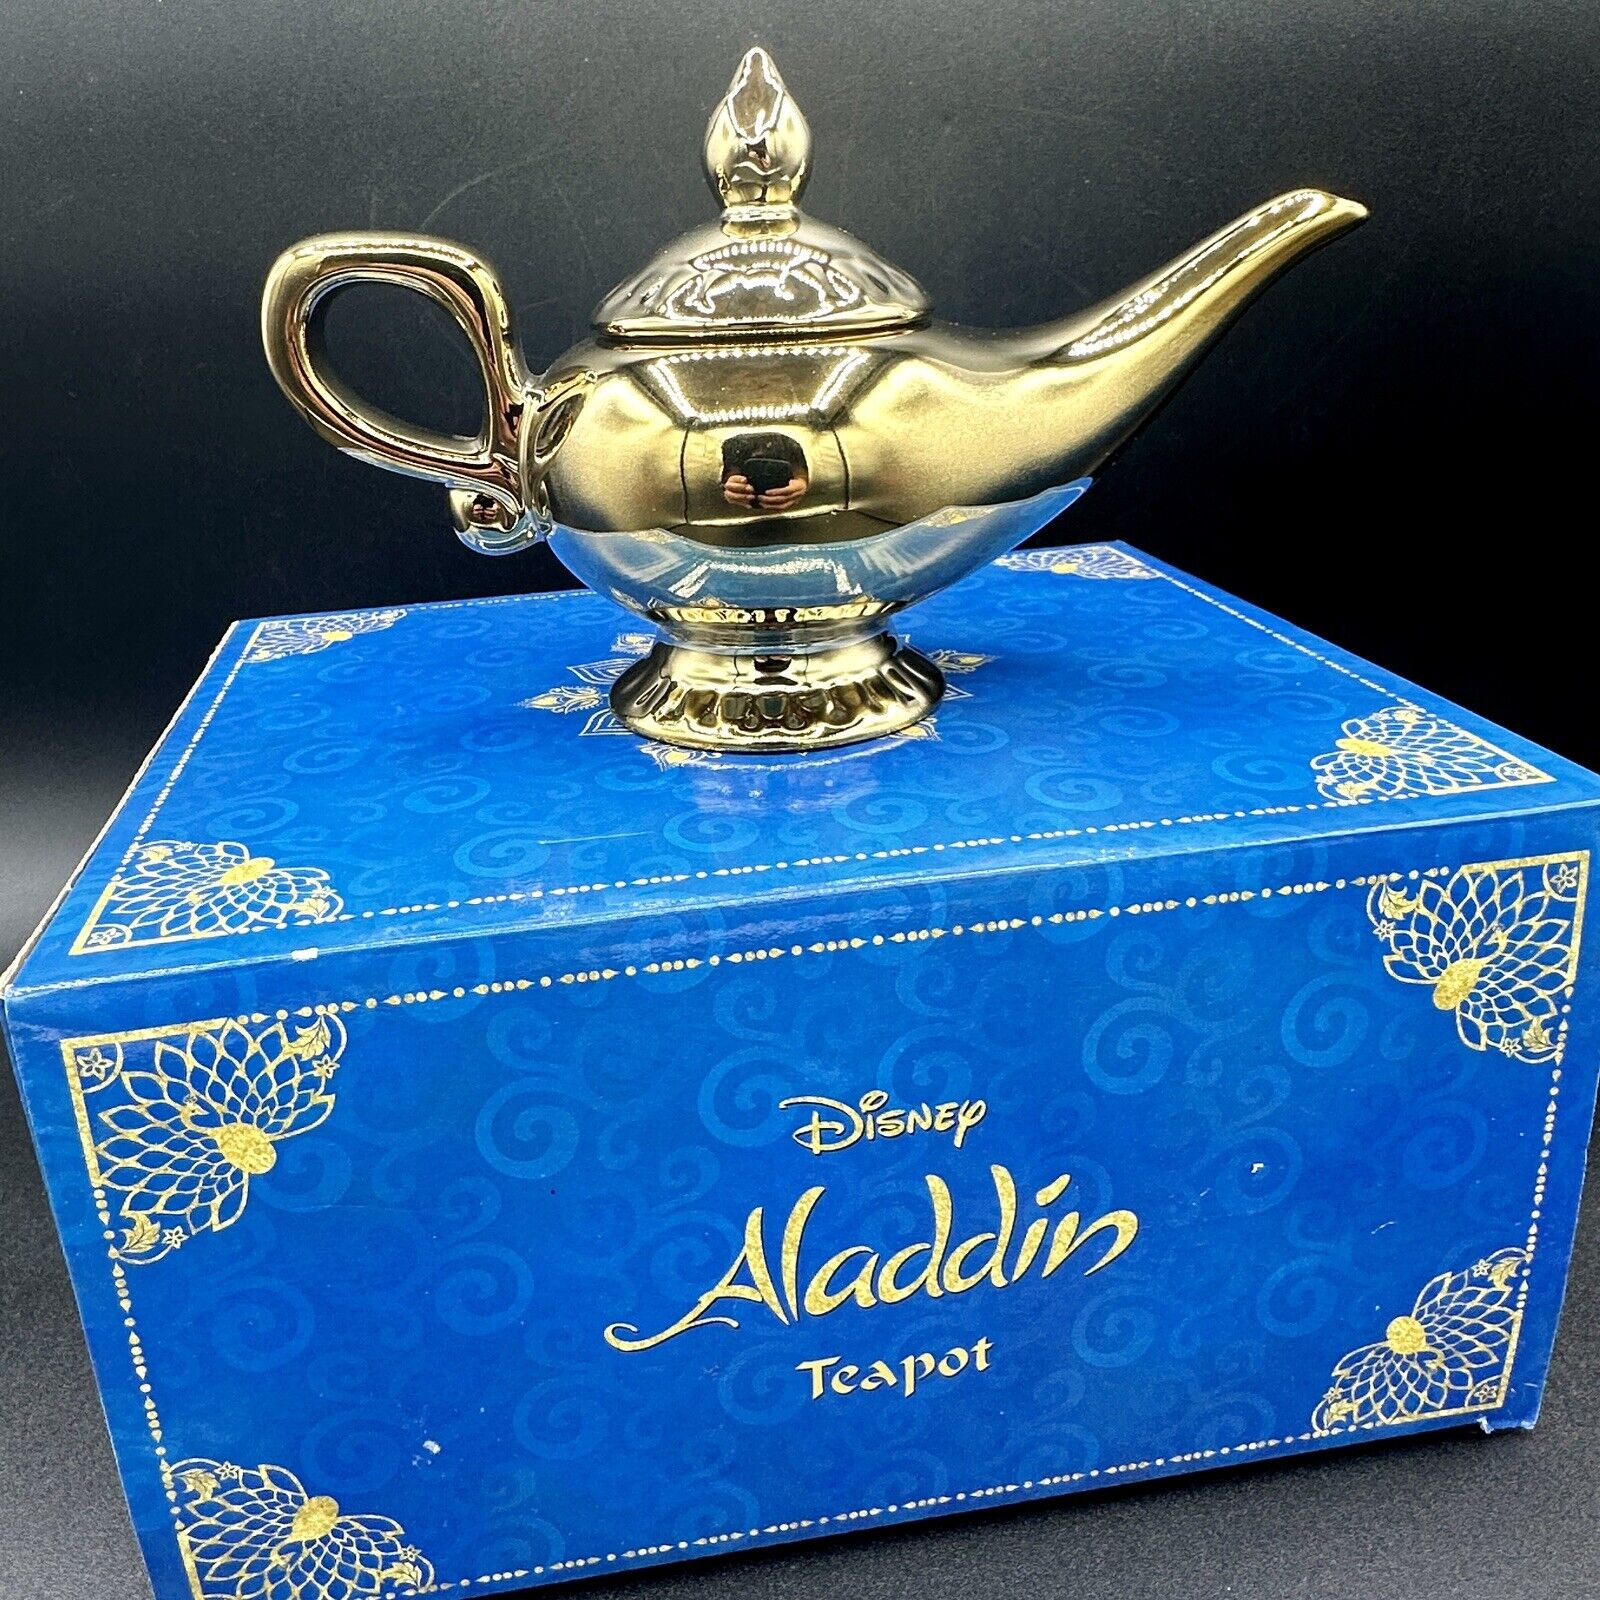 Disney Aladdin Genie's Lamp Teapot Authentic Disney Merch Gold Tone New In Box